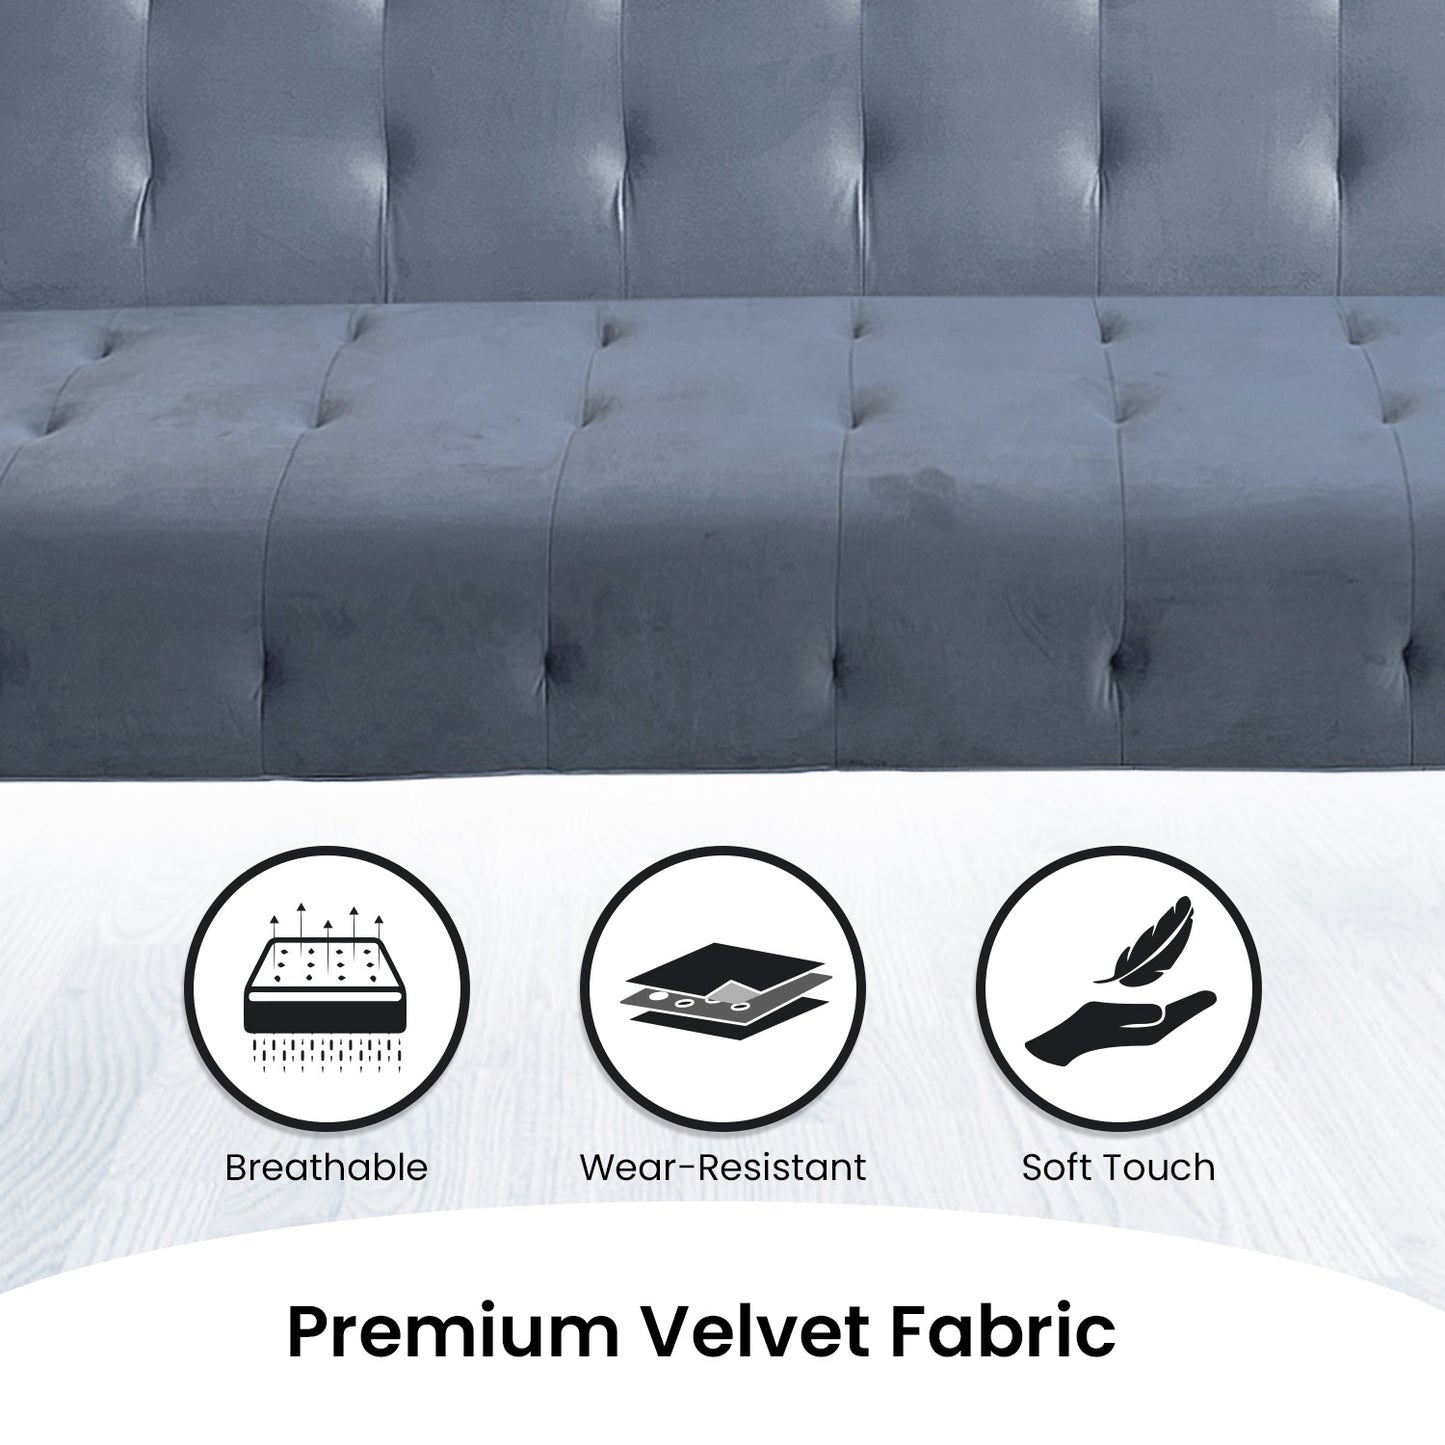 Ava Tufted Velvet Sofa Bed by Sarantino - Light Grey